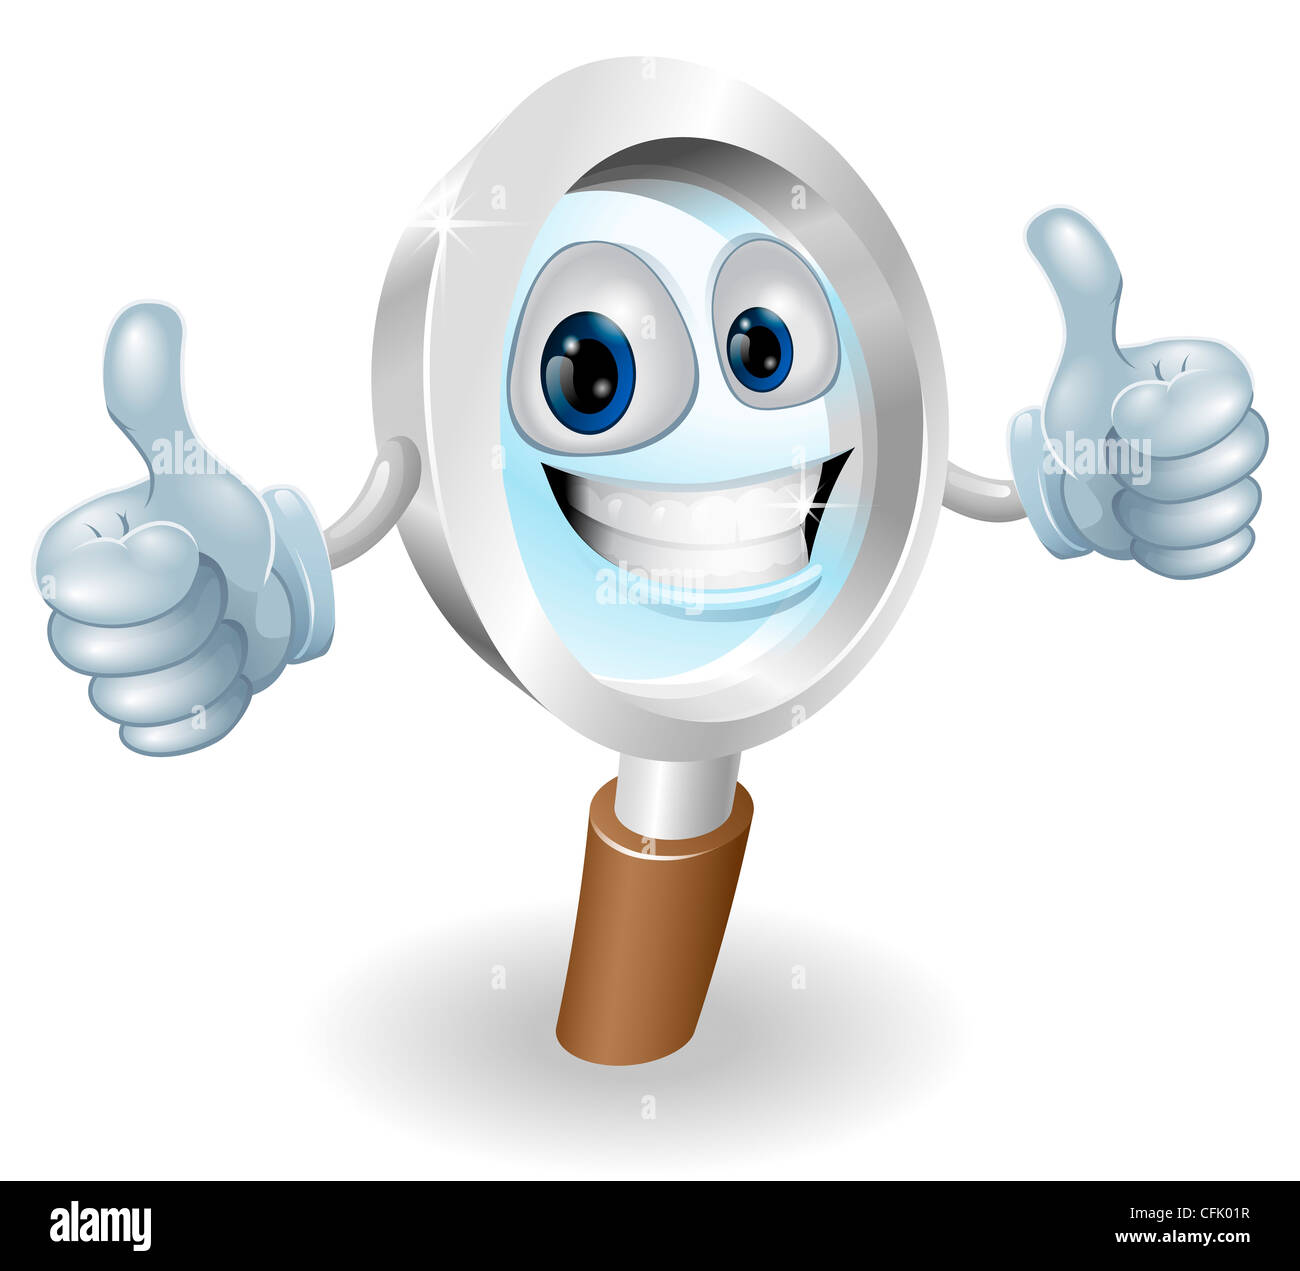 Cartoon character magnifying glass man mascot illustration graphic Stock Photo